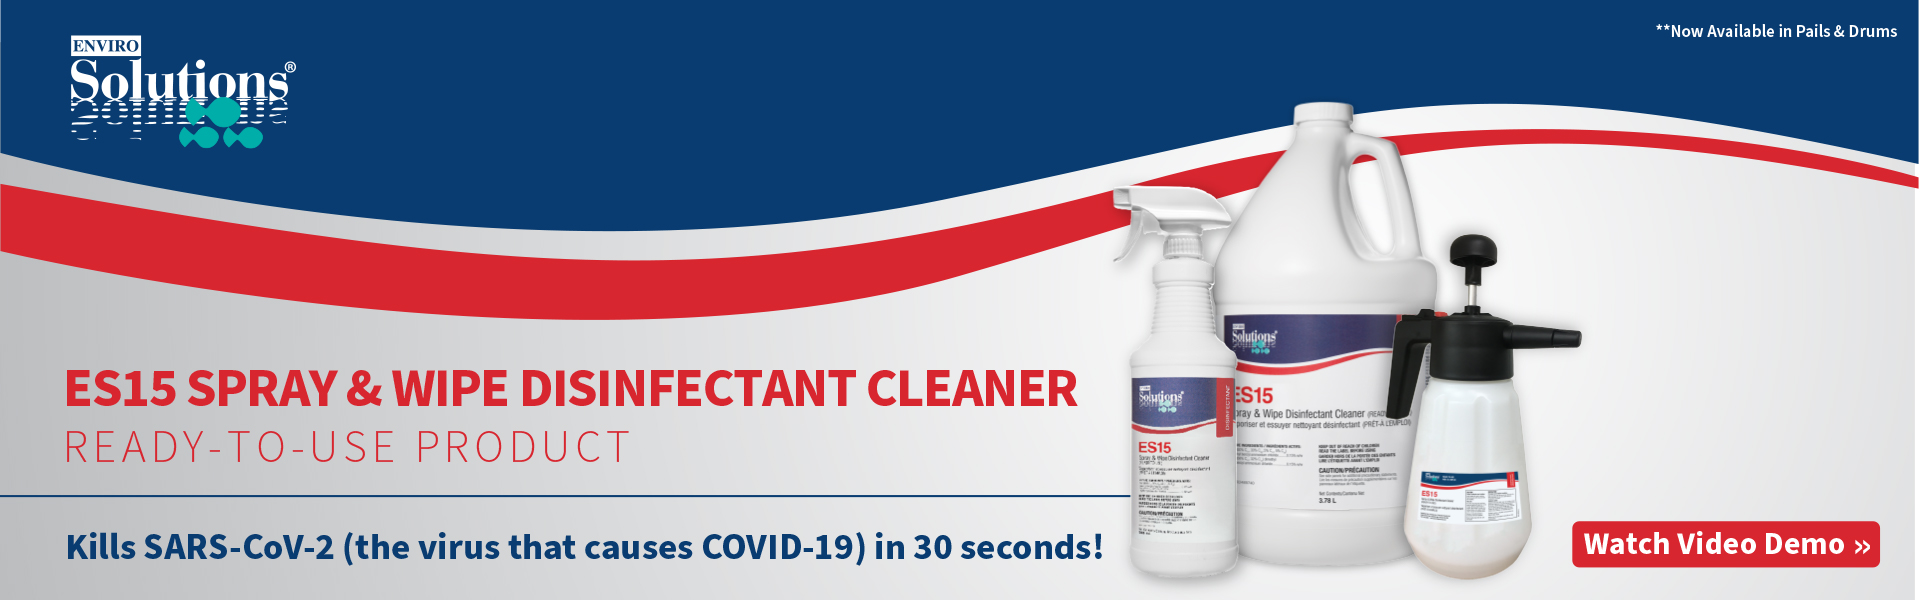 Enviro-Solutions ES15 Spray & Wipe Disinfectant